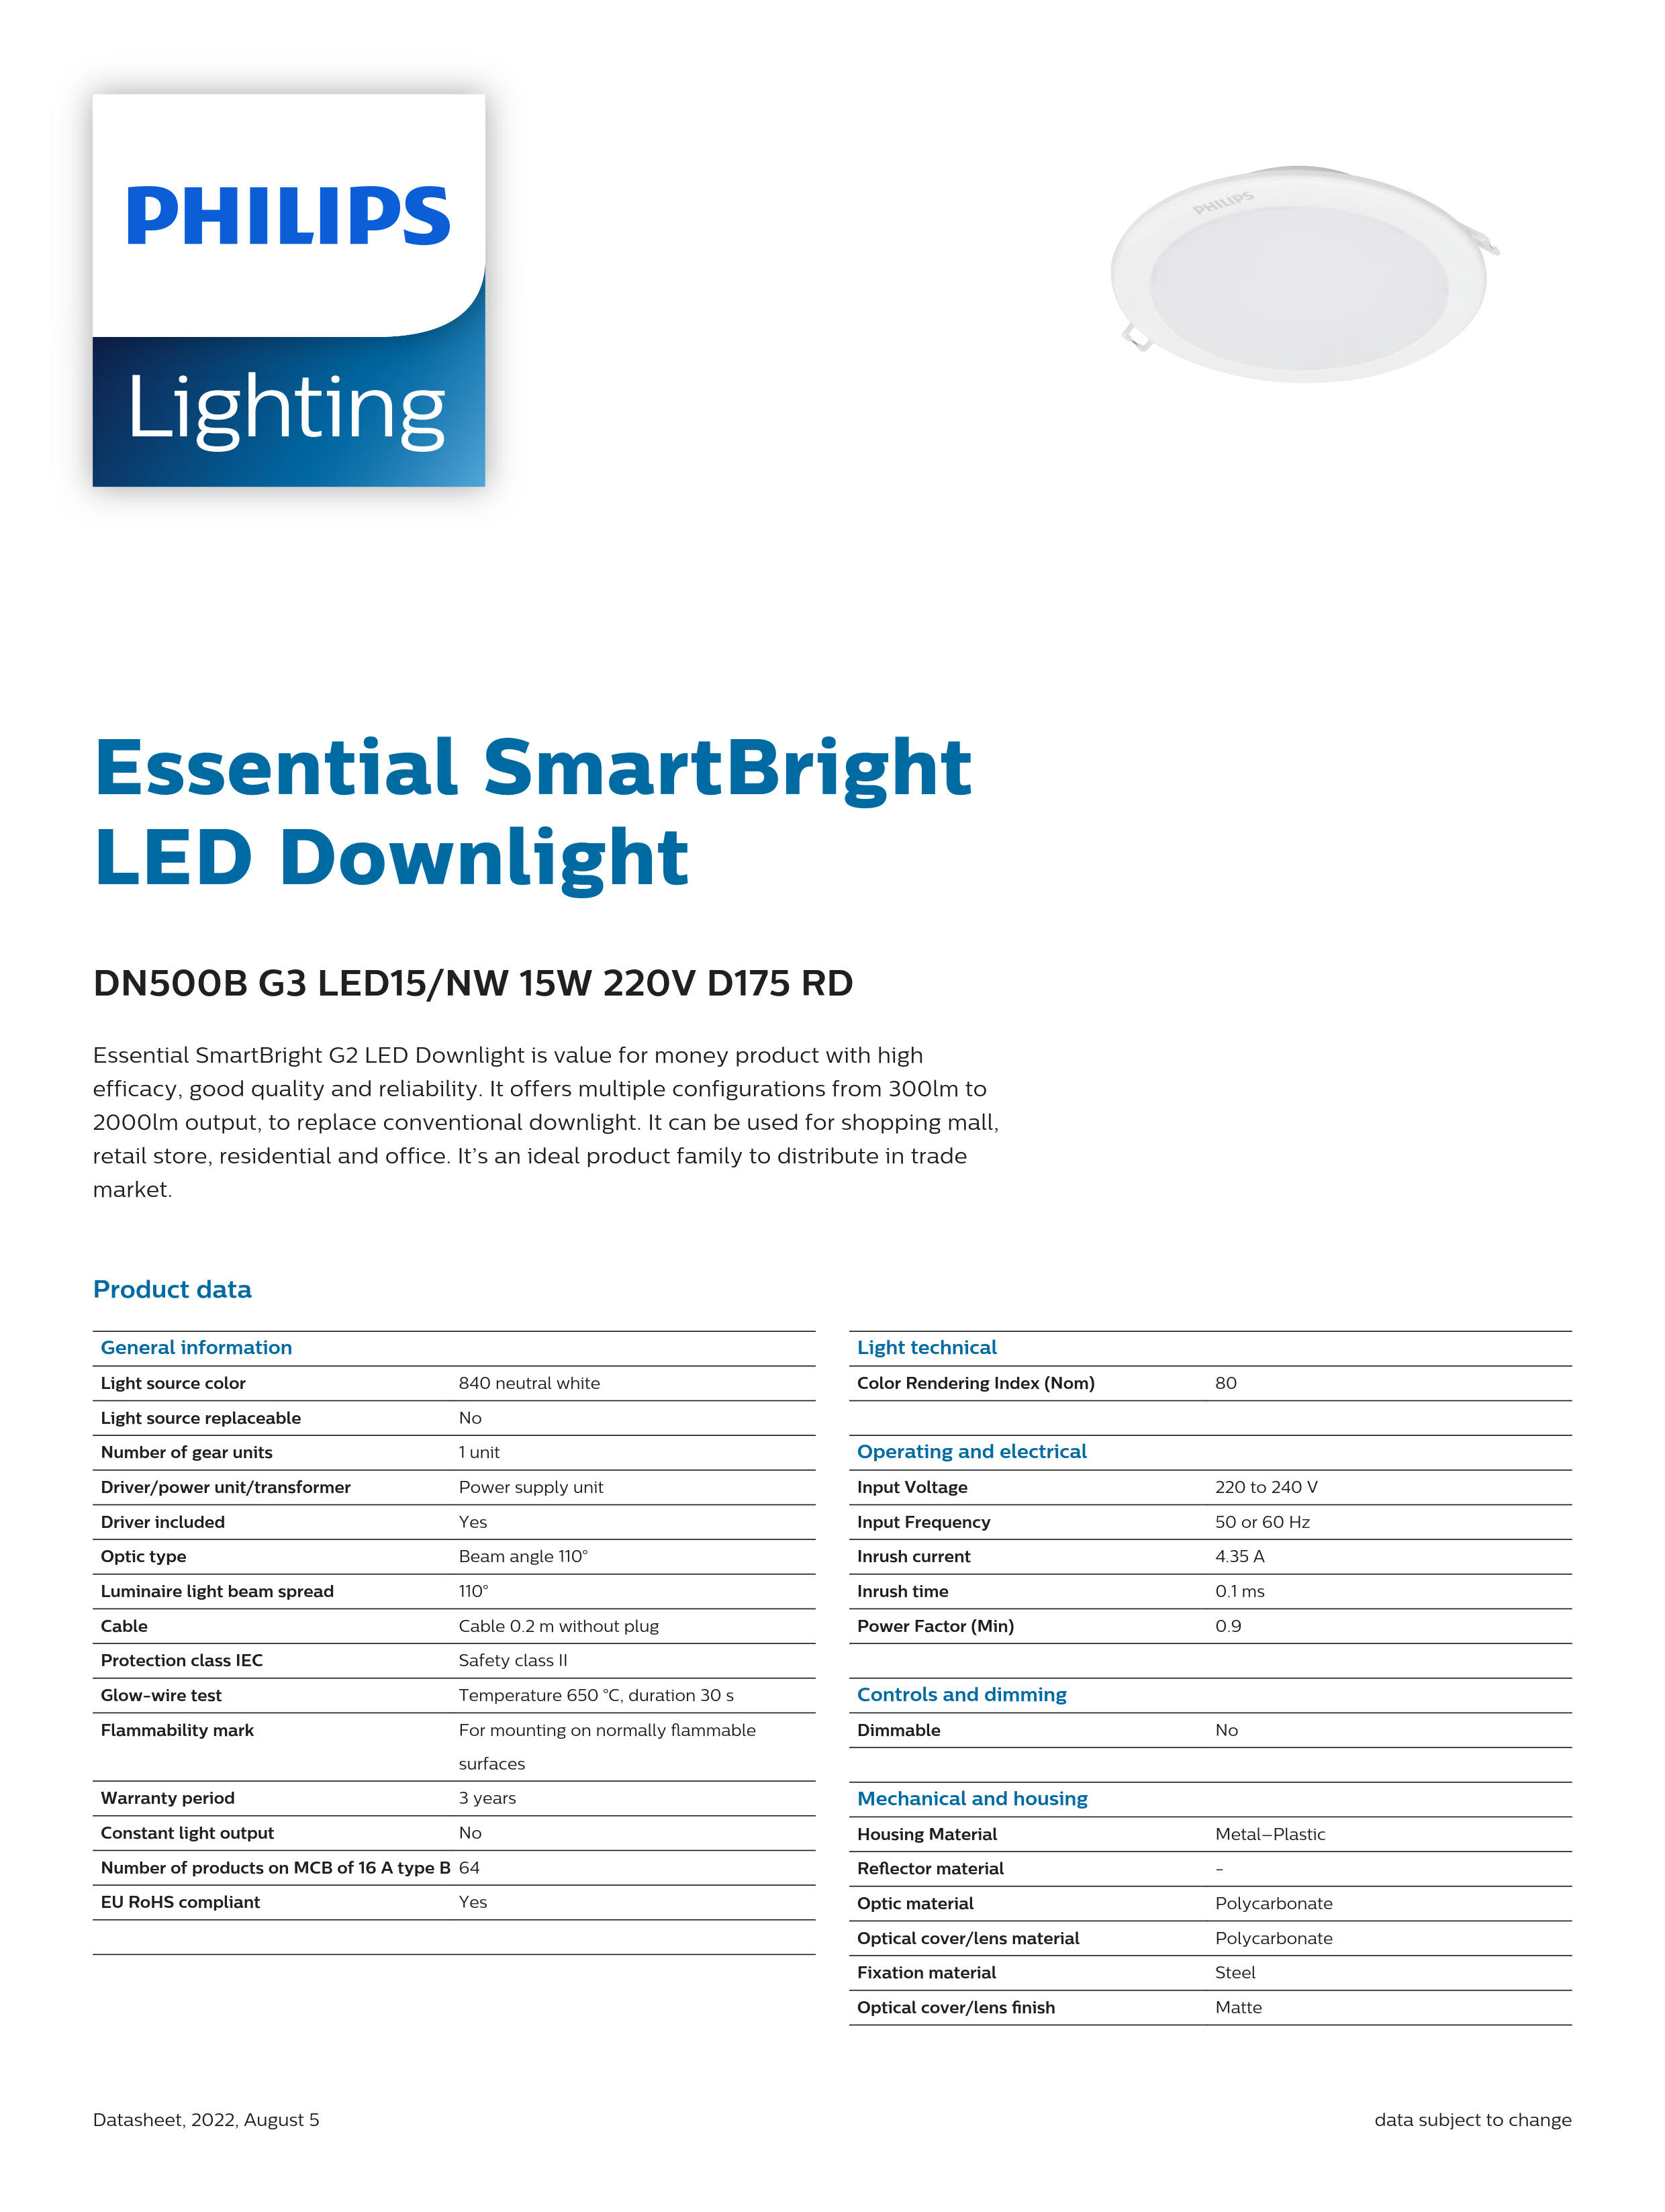 PHILIPS LED downlight DN500B G3 LED15/NW 15W 220V D175 RD 929002677940